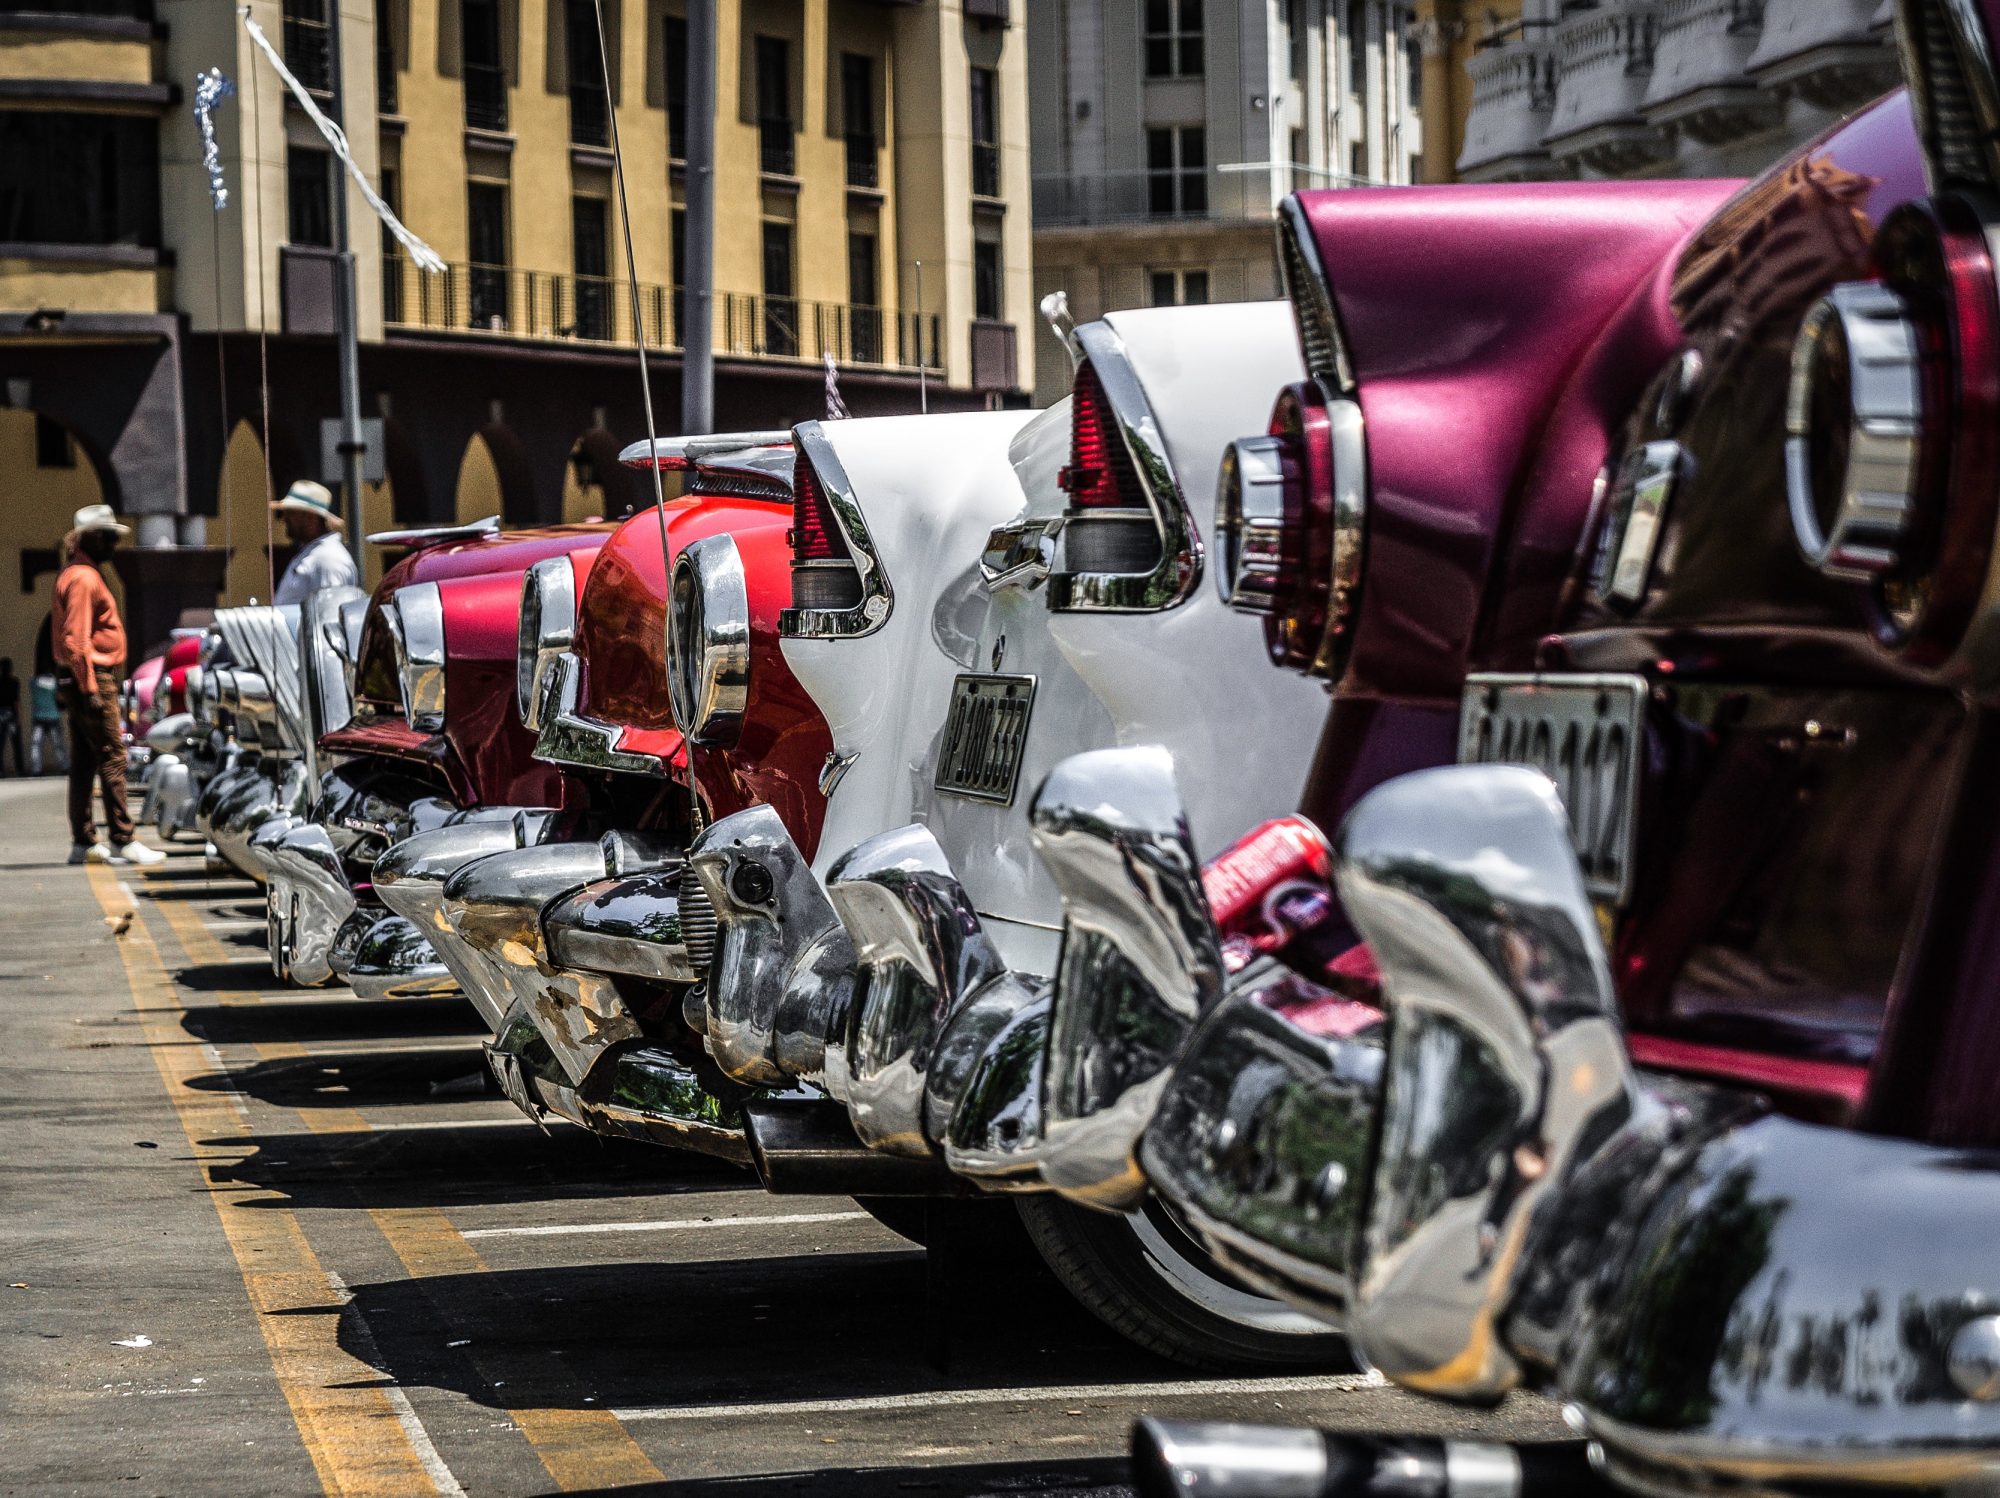 Vintage American cars in Havana Cuba on SelfishMe Travel LLC